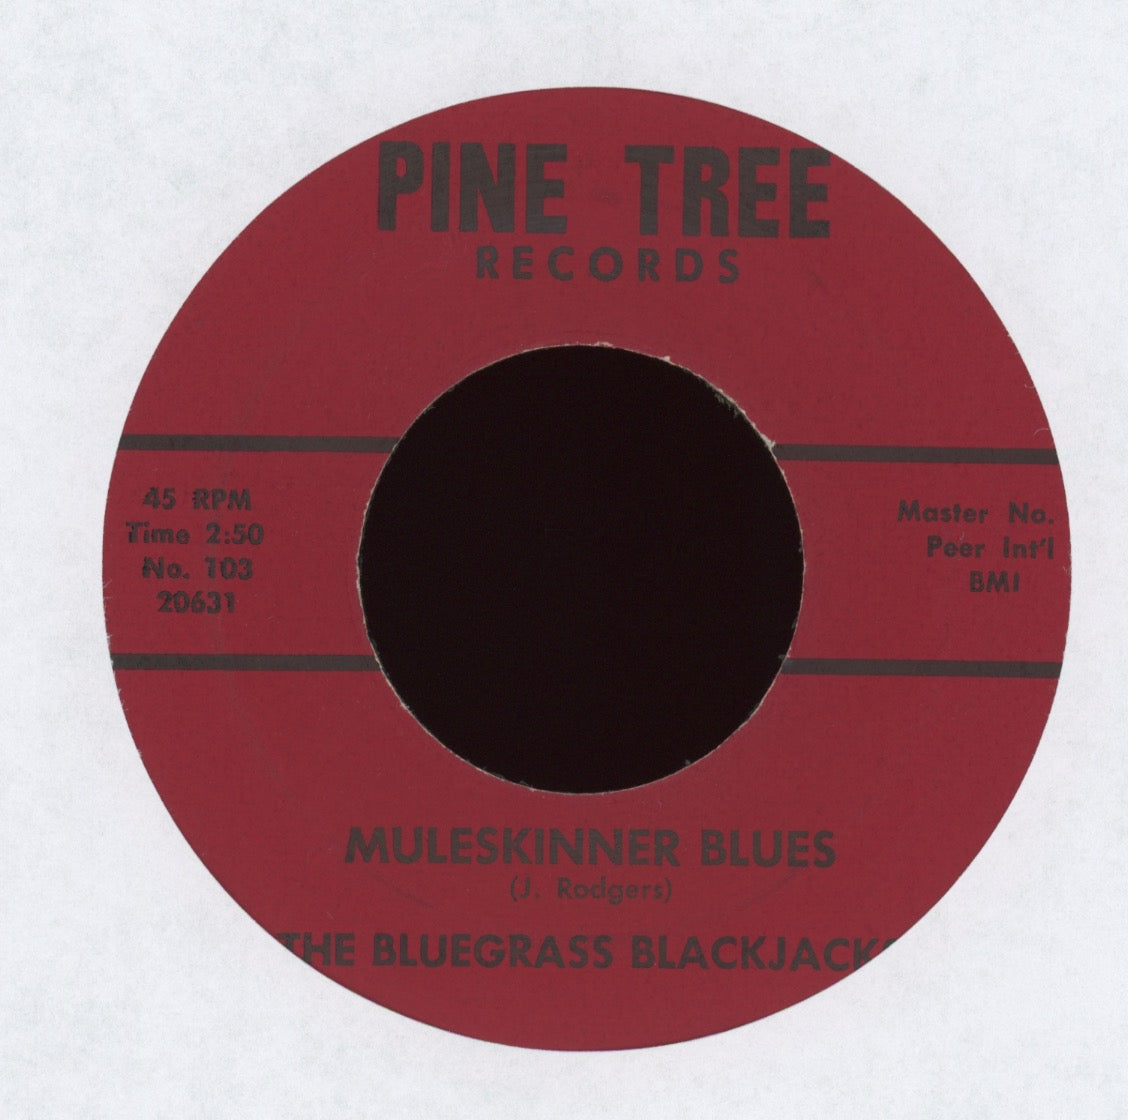 The Bluegrass Blackjacks - Muleskinner Blues on Pine Tree